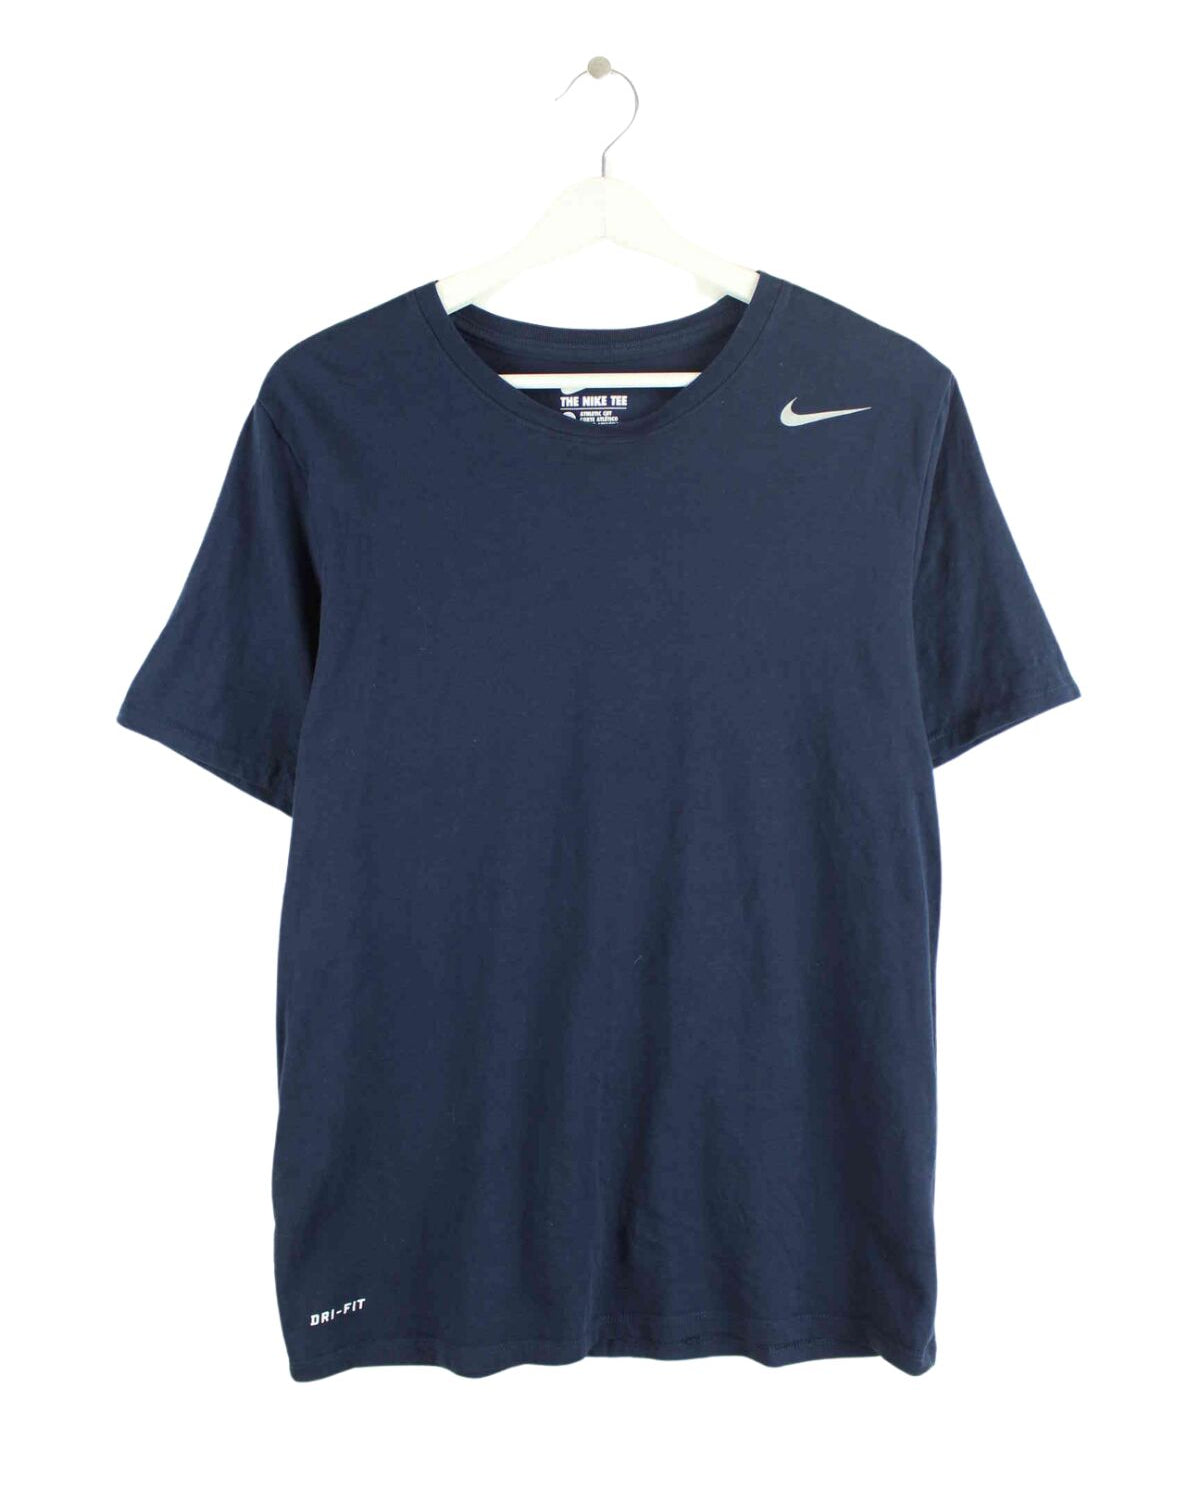 Nike Dri Fit Swoosh Print T-Shirt Blau M (front image)